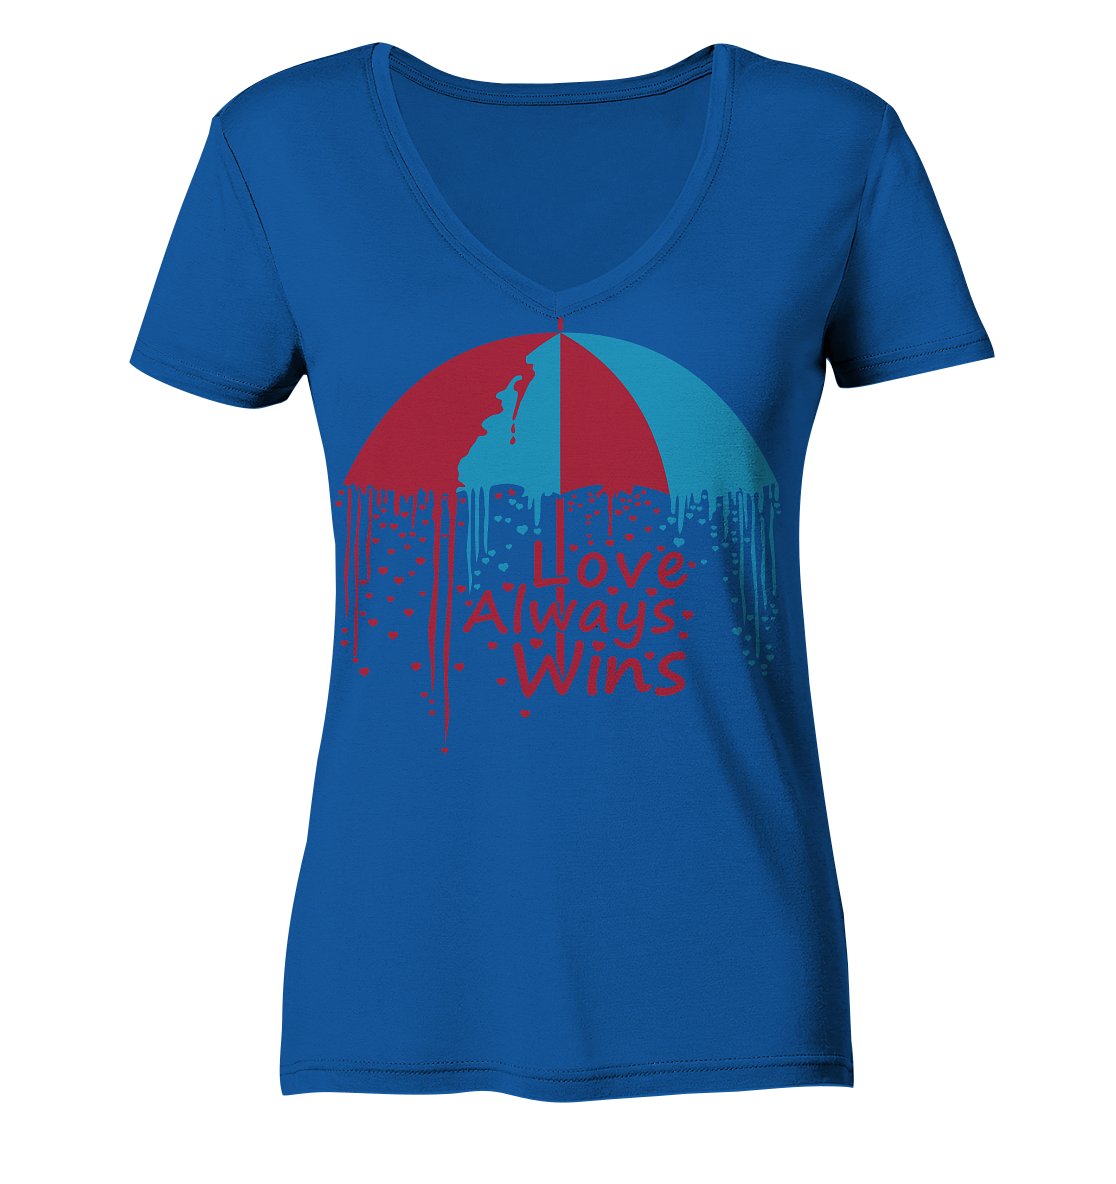 Love always wins - Ladies Organic V-Neck Shirt